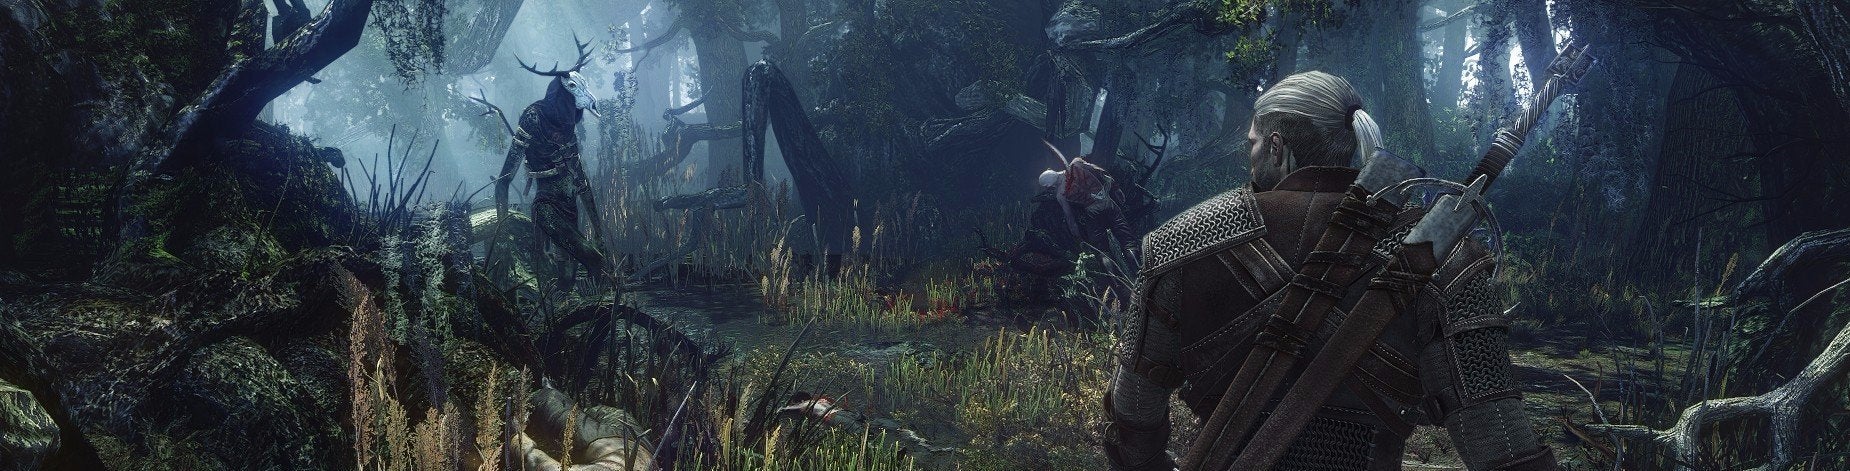 Bilder zu The Witcher 3: PS4 oder Xbox One? - Digital Foundry Performance-Analyse